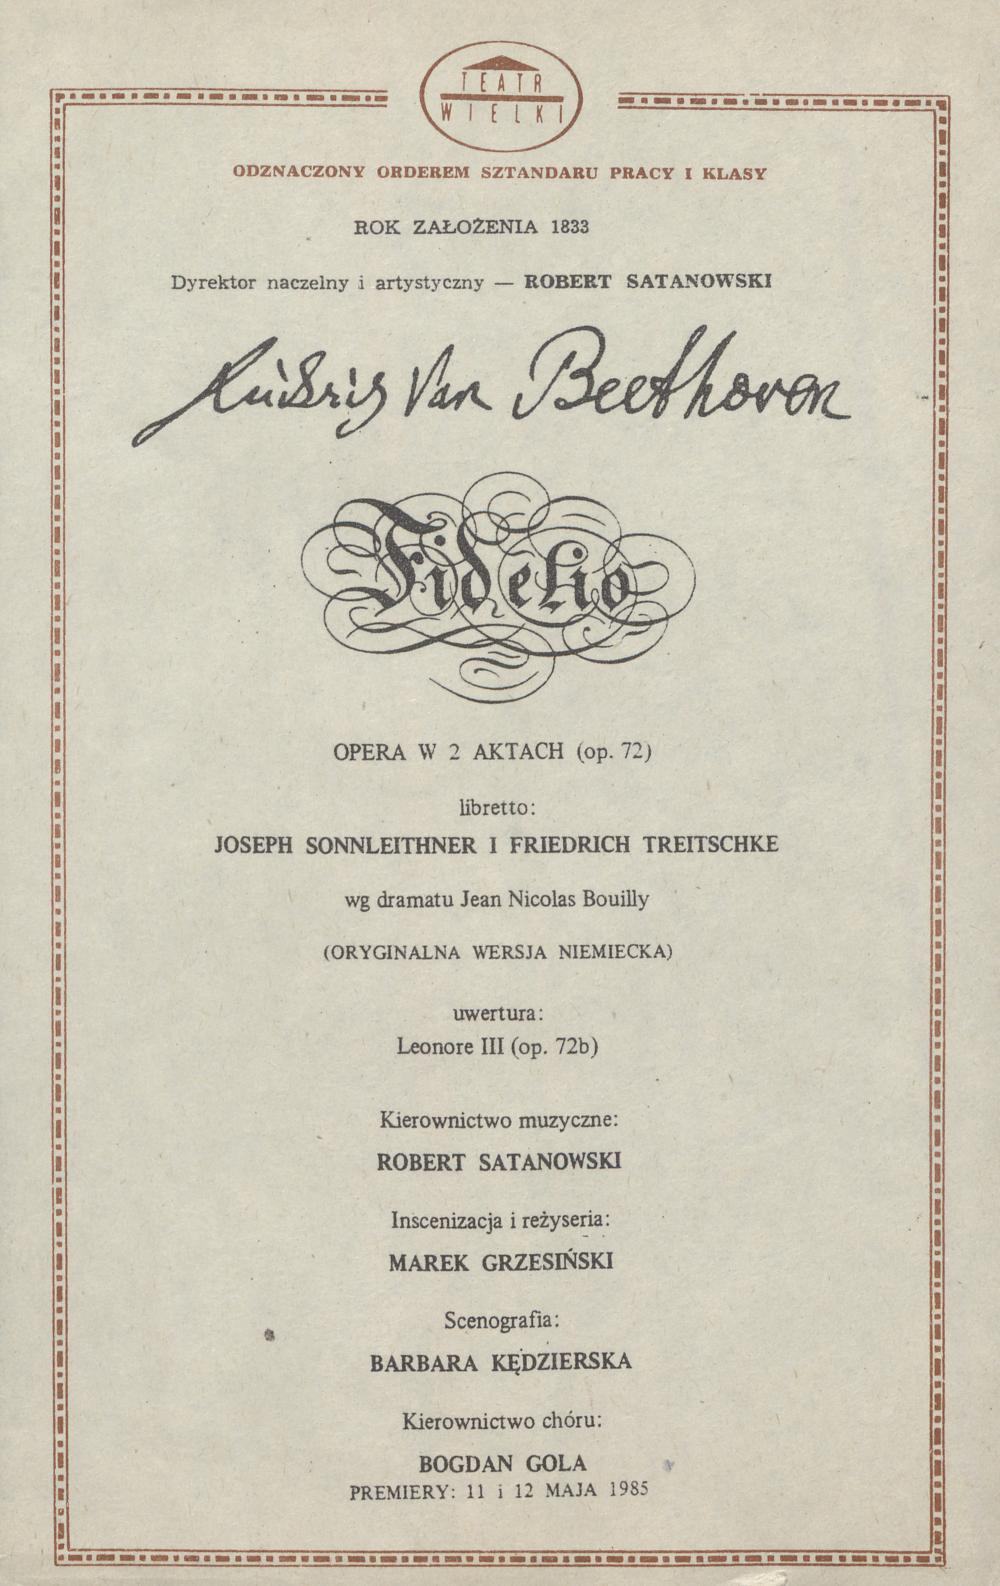 Wkładka premierowa – premiera II „Fidelio” Ludwig van Beethoven 12-05-1985